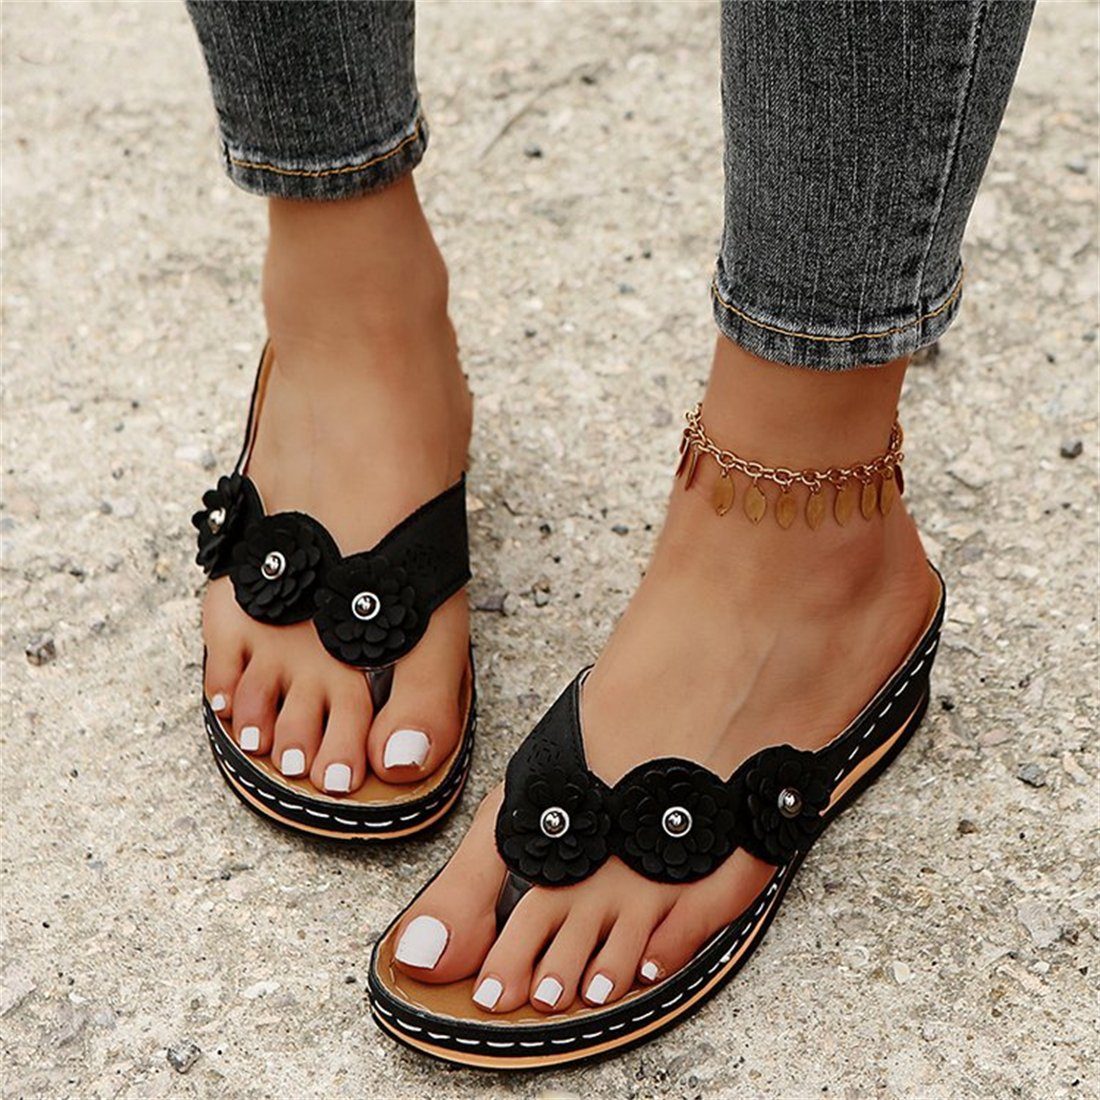 Sandale sandalen YOOdy~ Sommerliche Sandale Schwarz Sandalette,Sommer Damen-Flip-Flops-